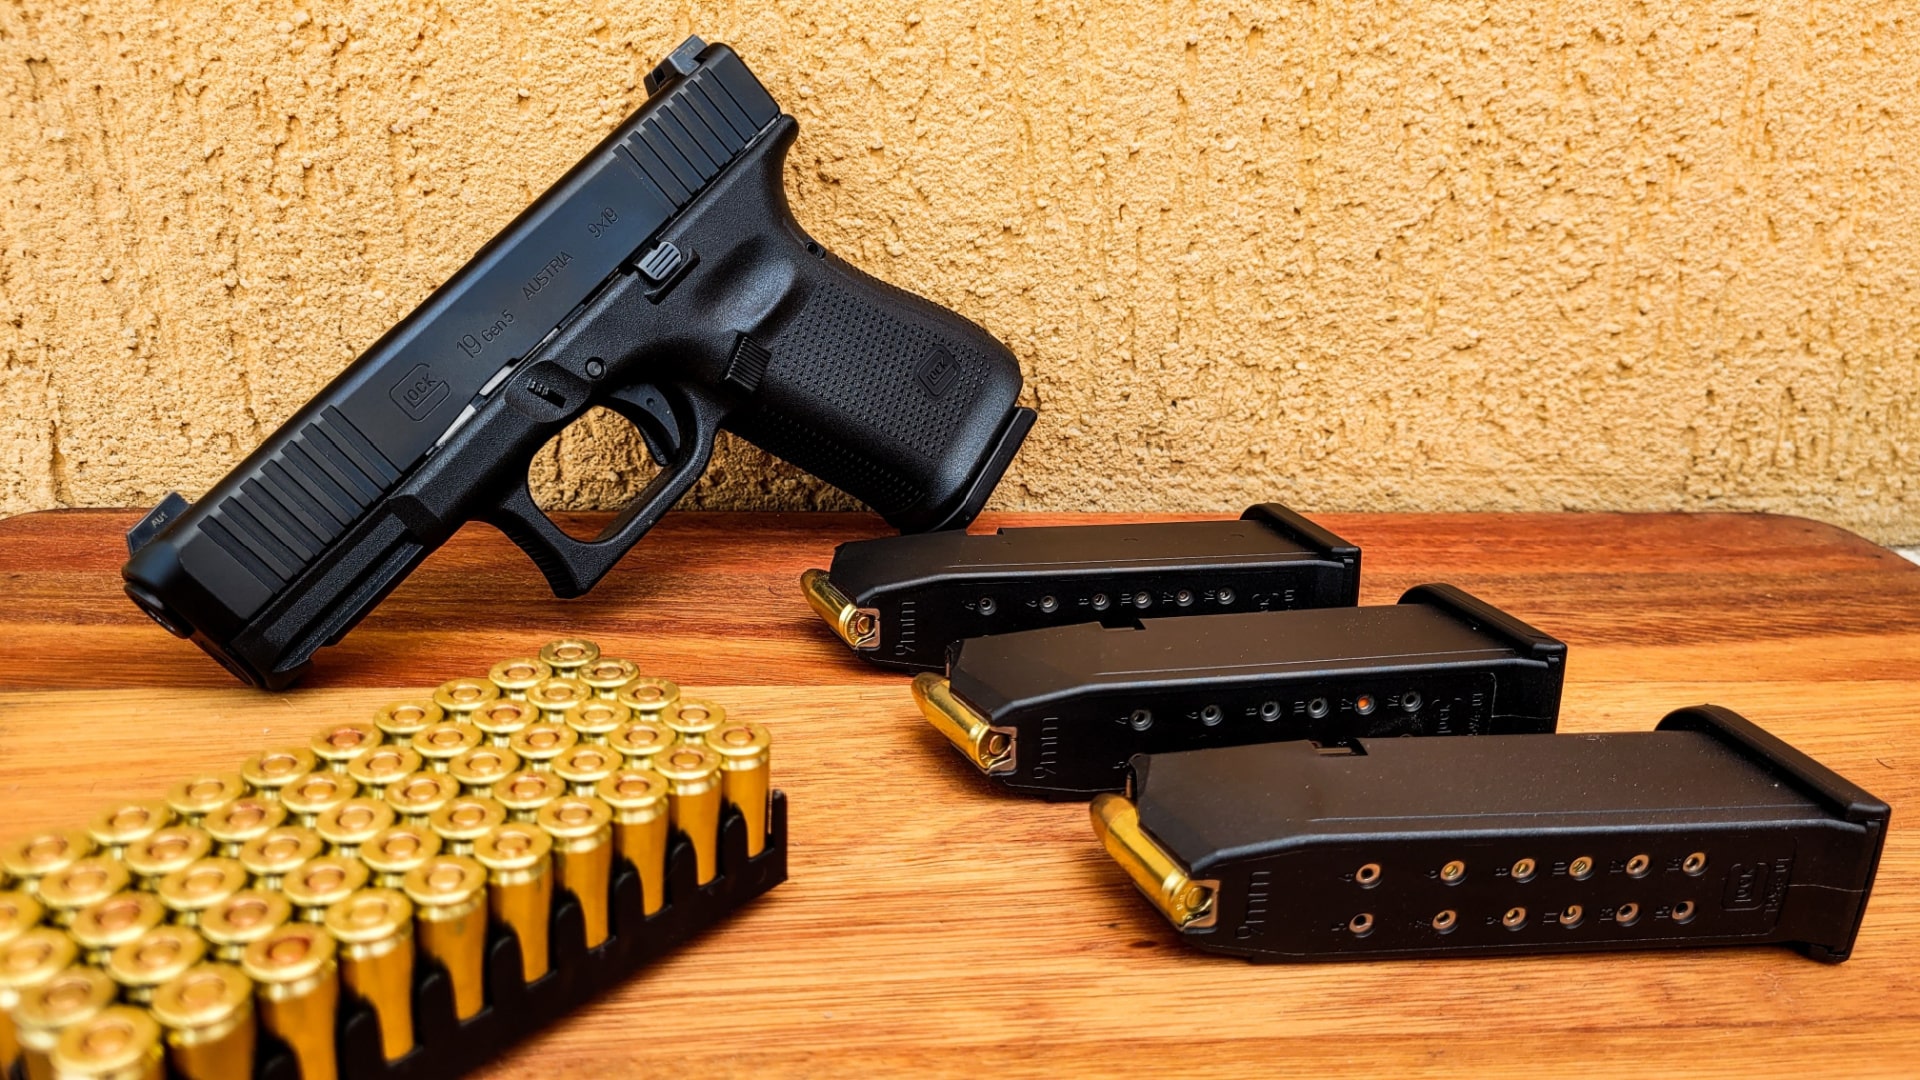 Glock Model 19 9mm Gen 4 with Clips Weapon Compact Handgun Picture